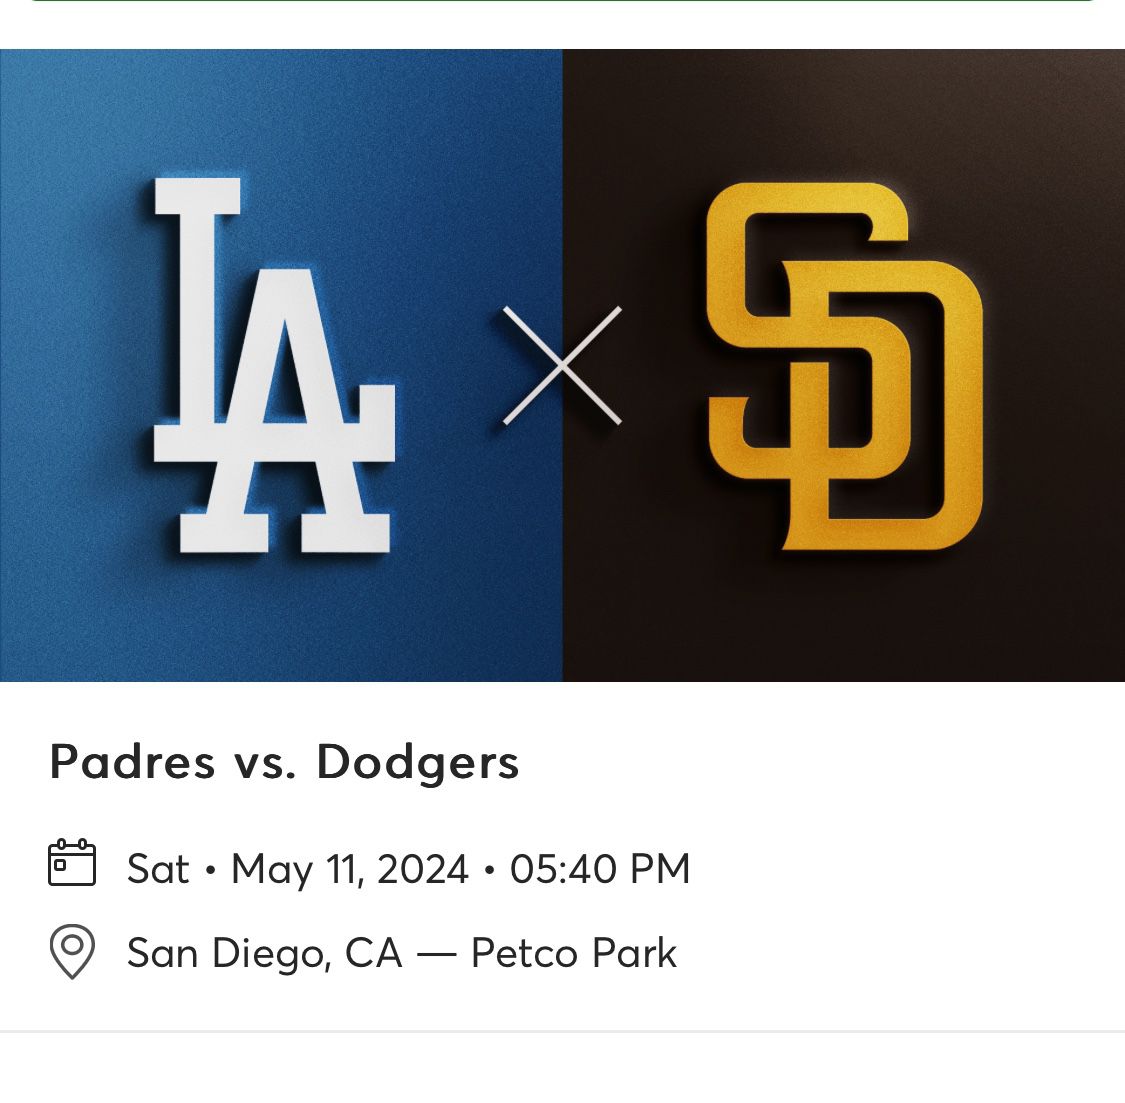 Padres vs. Dodgers  Sat • May 11, 2024 • 05:40 PM - San Diego, CA - •Petco Park